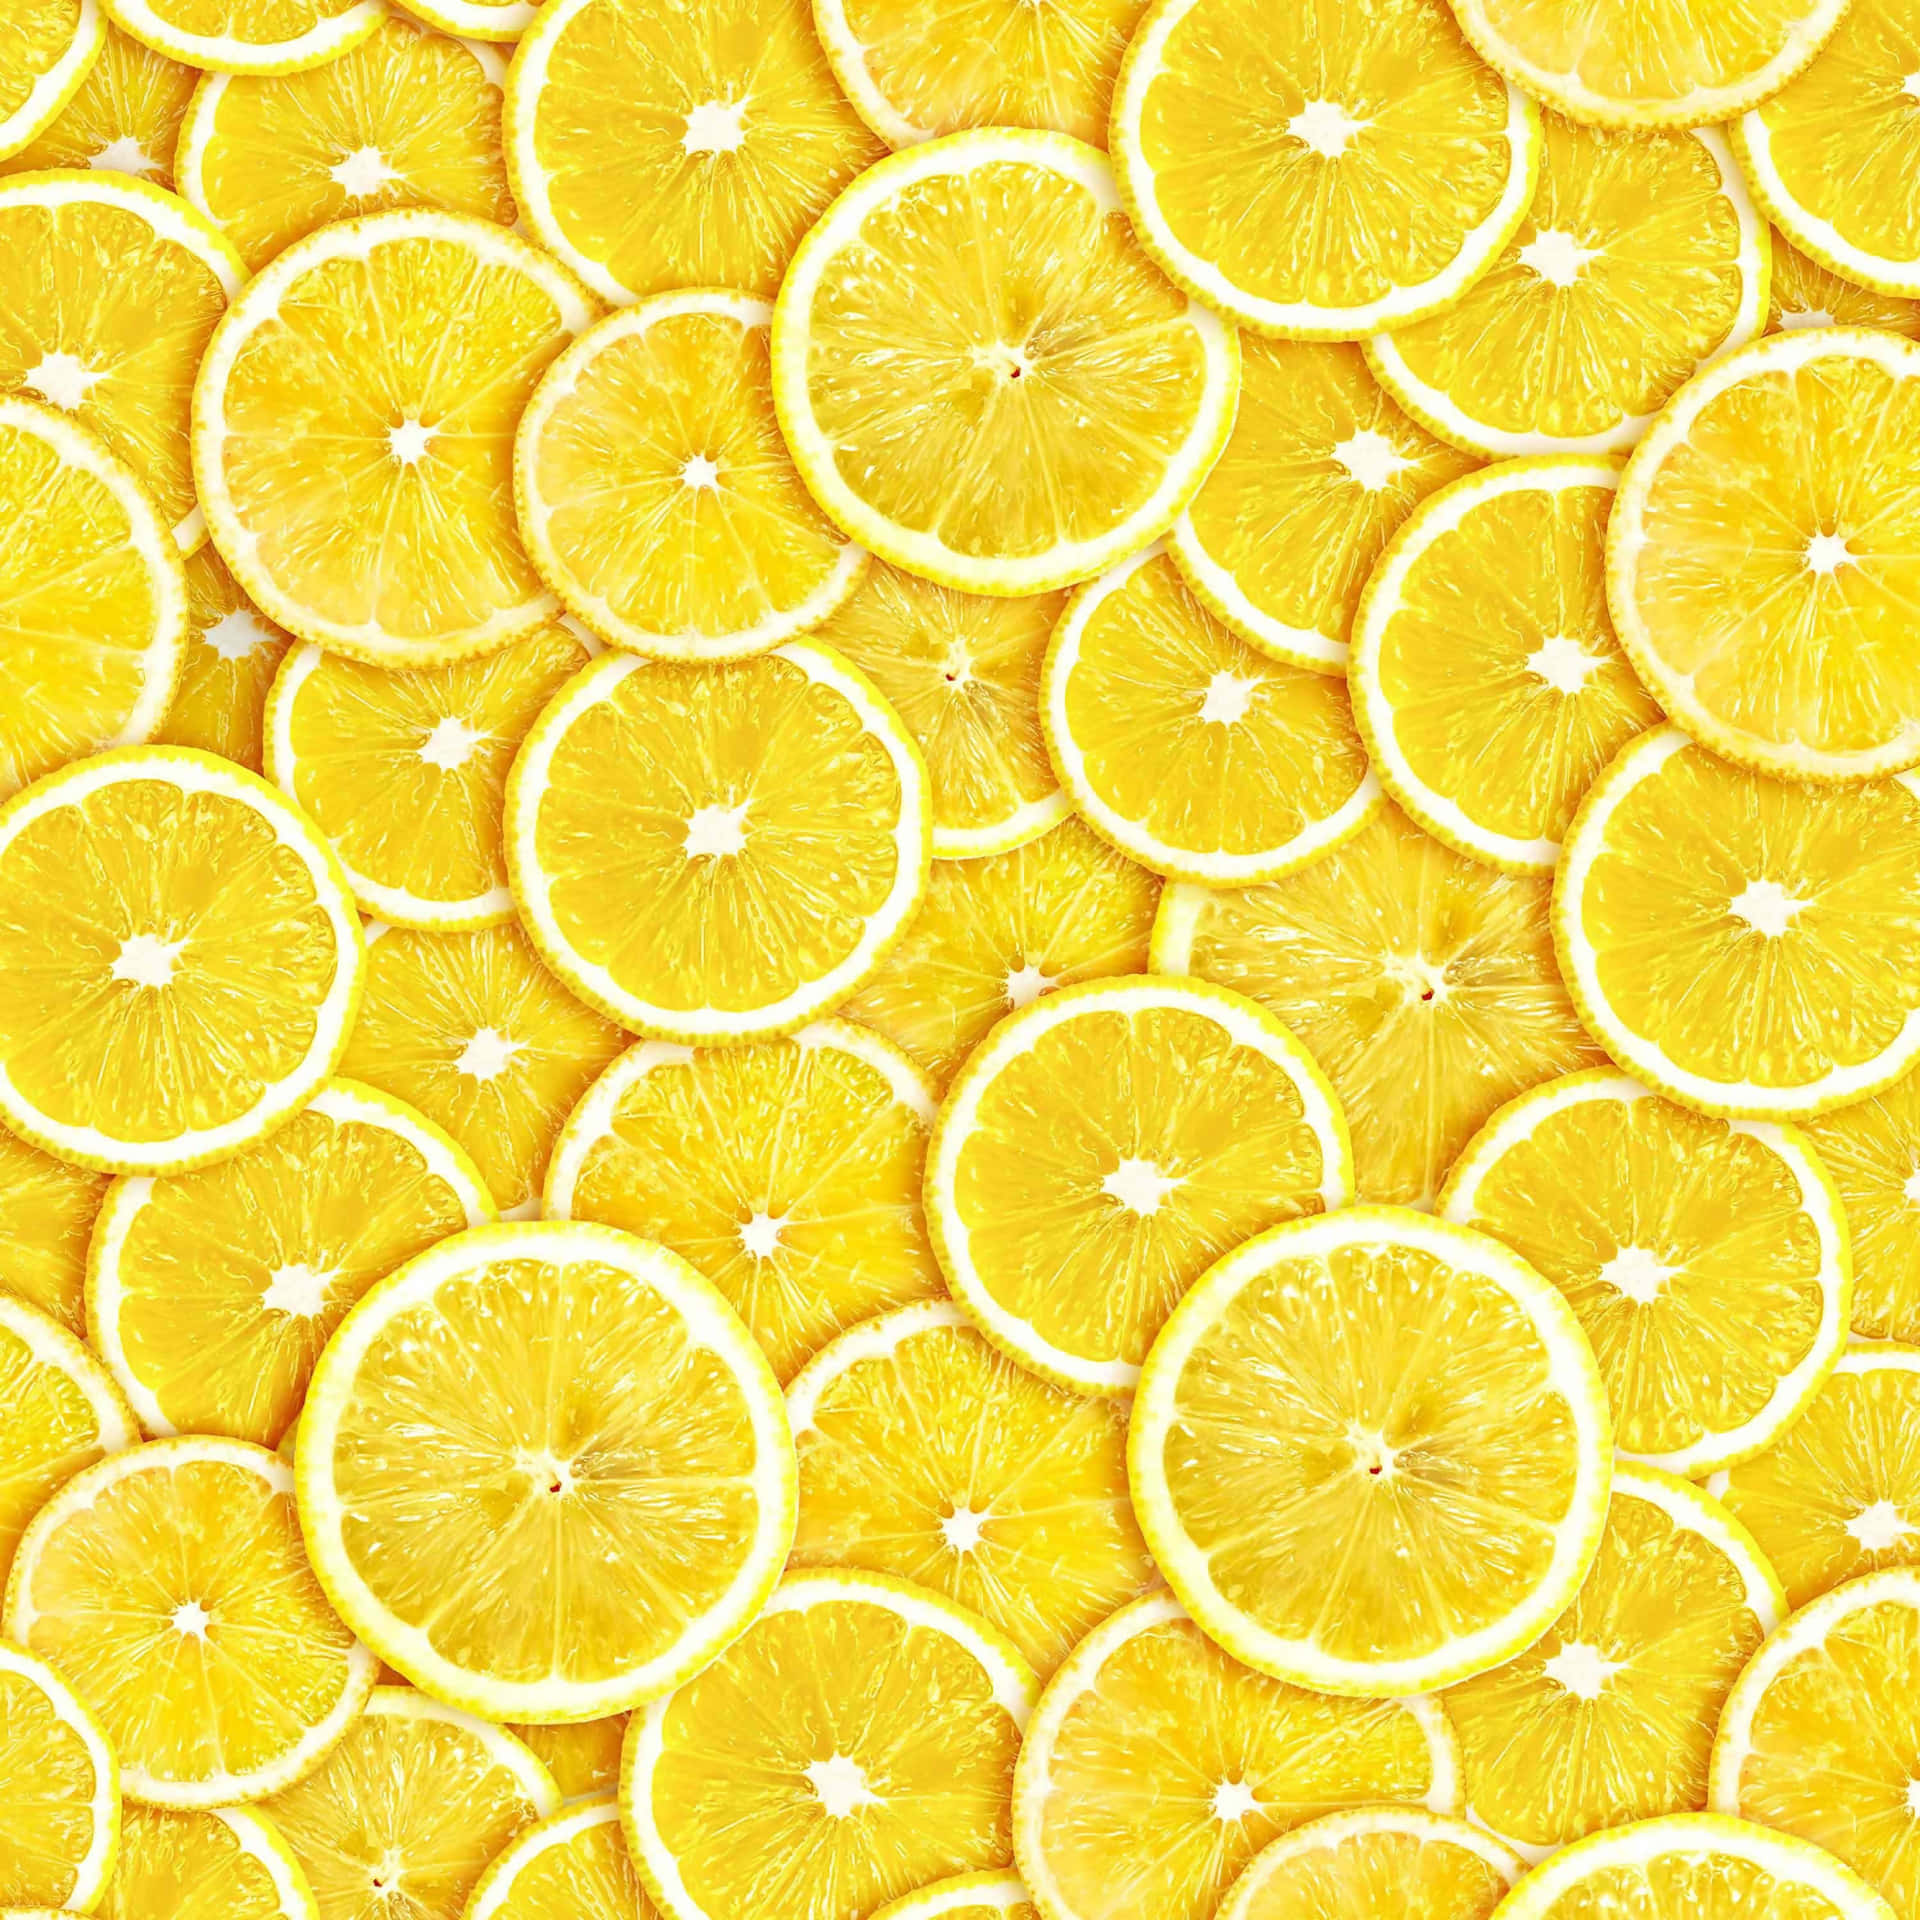 Lemon wallpaper background seamless pattern  Stock Illustration 65189044   PIXTA